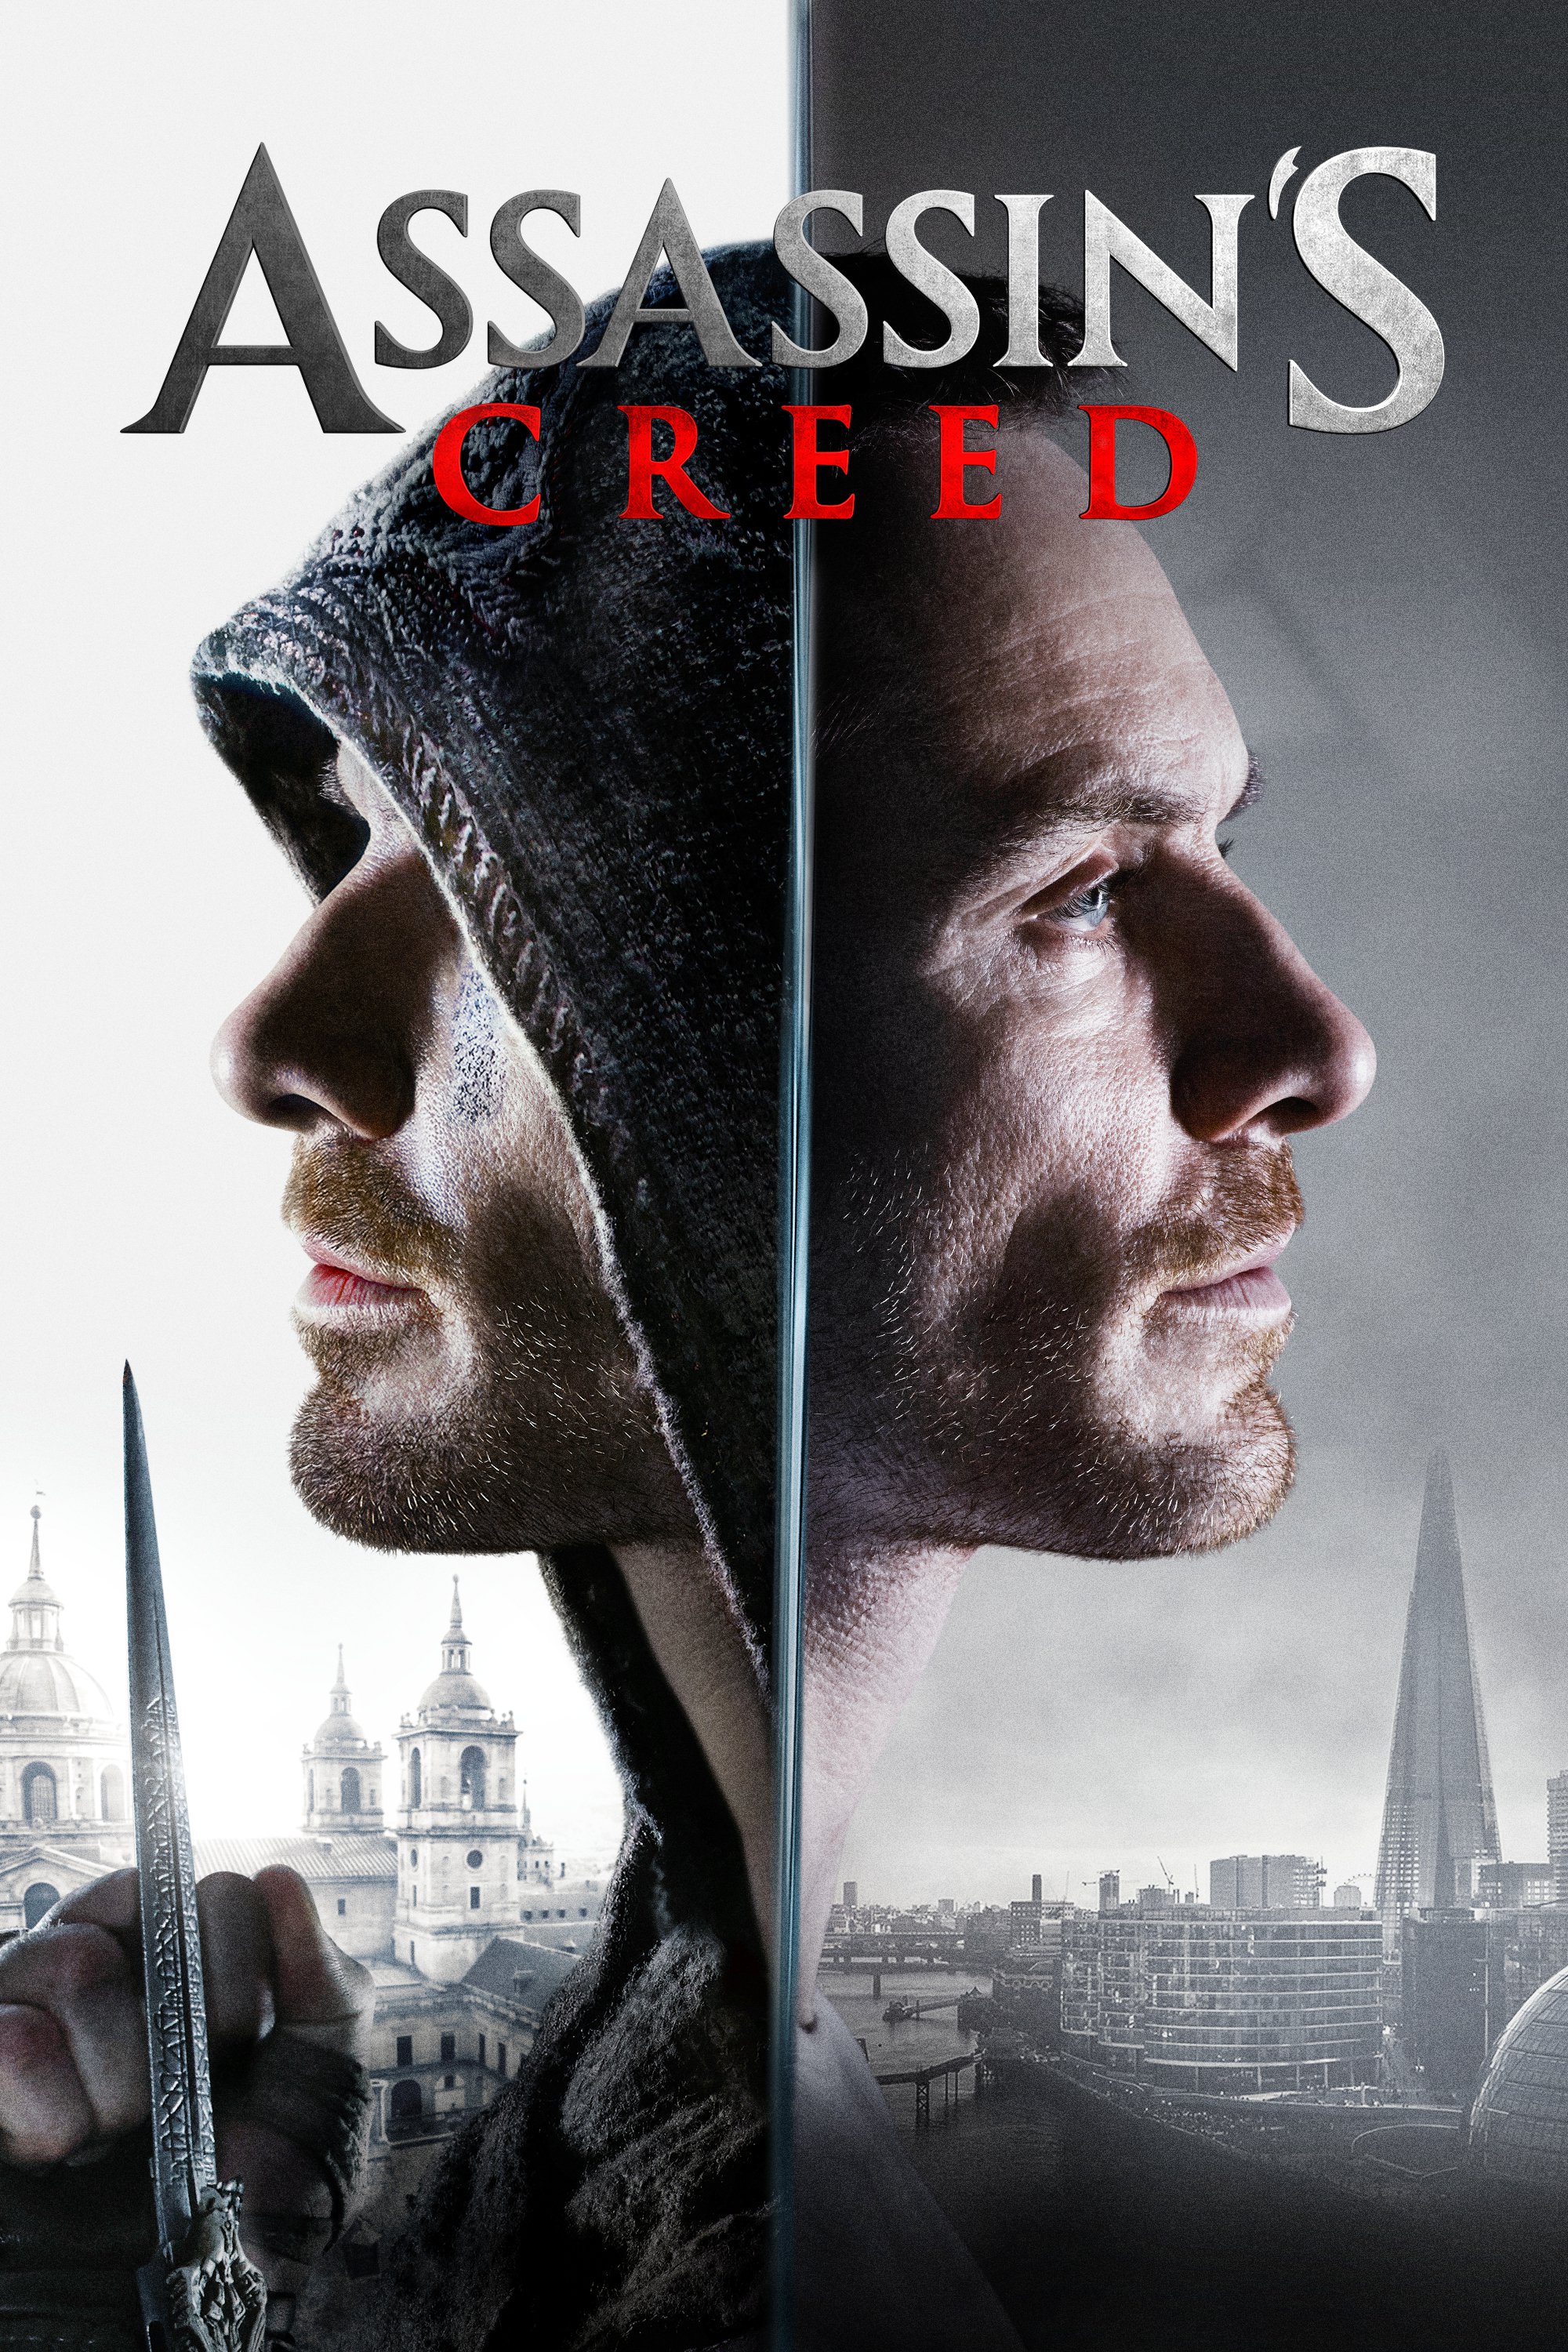 Plakat von "Assassin's Creed"